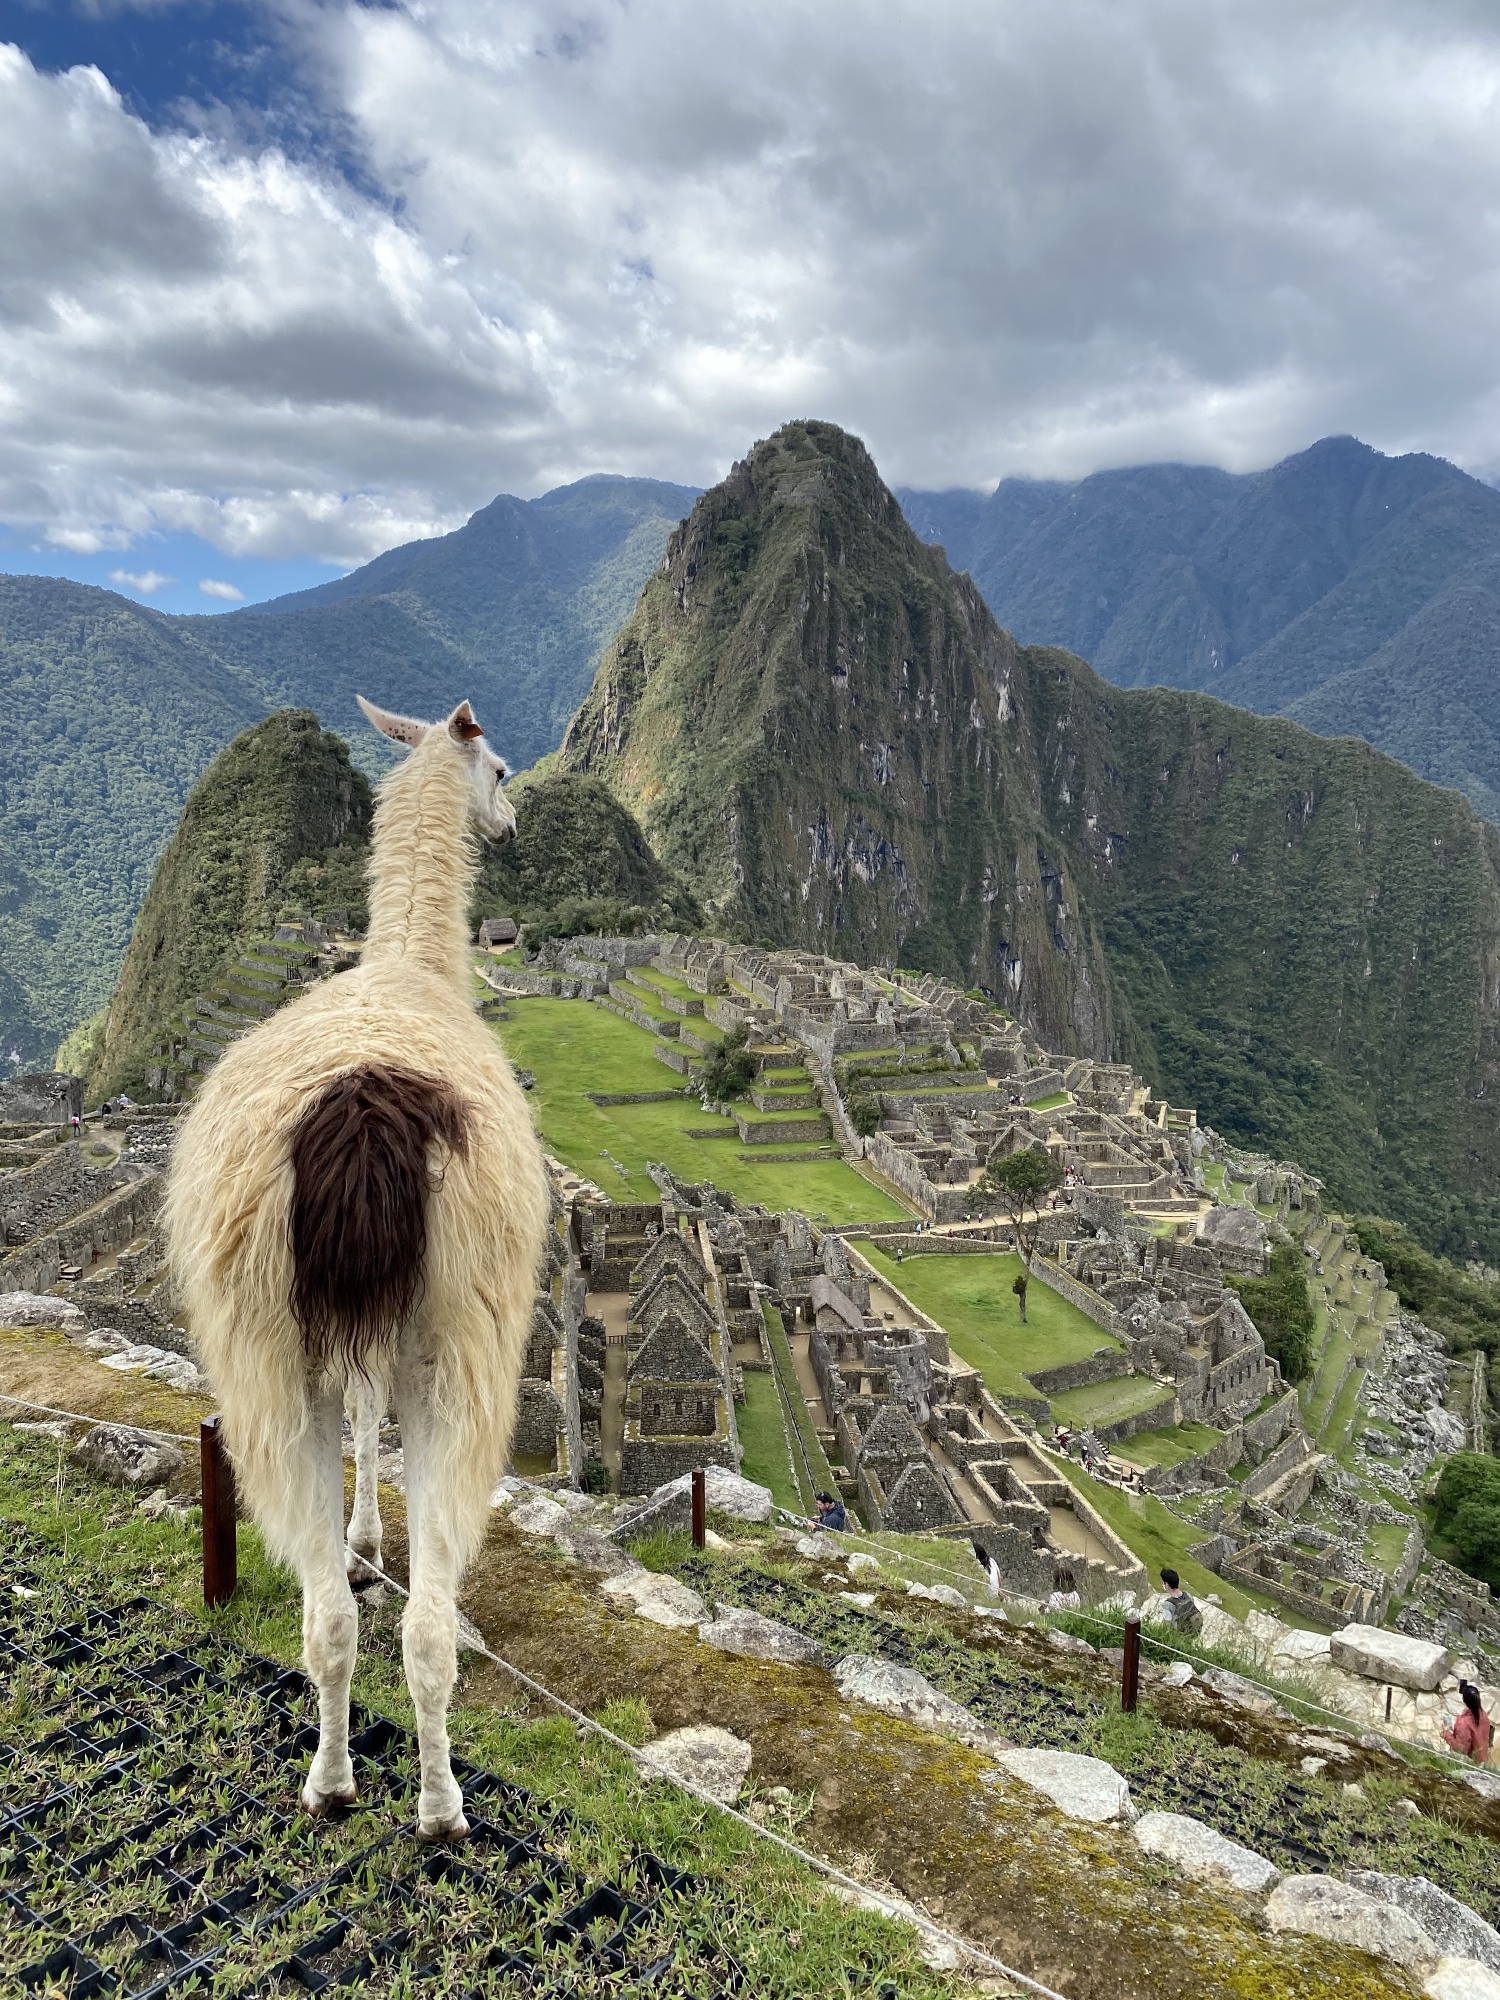 There, a perfect photo of Machu Picchu!